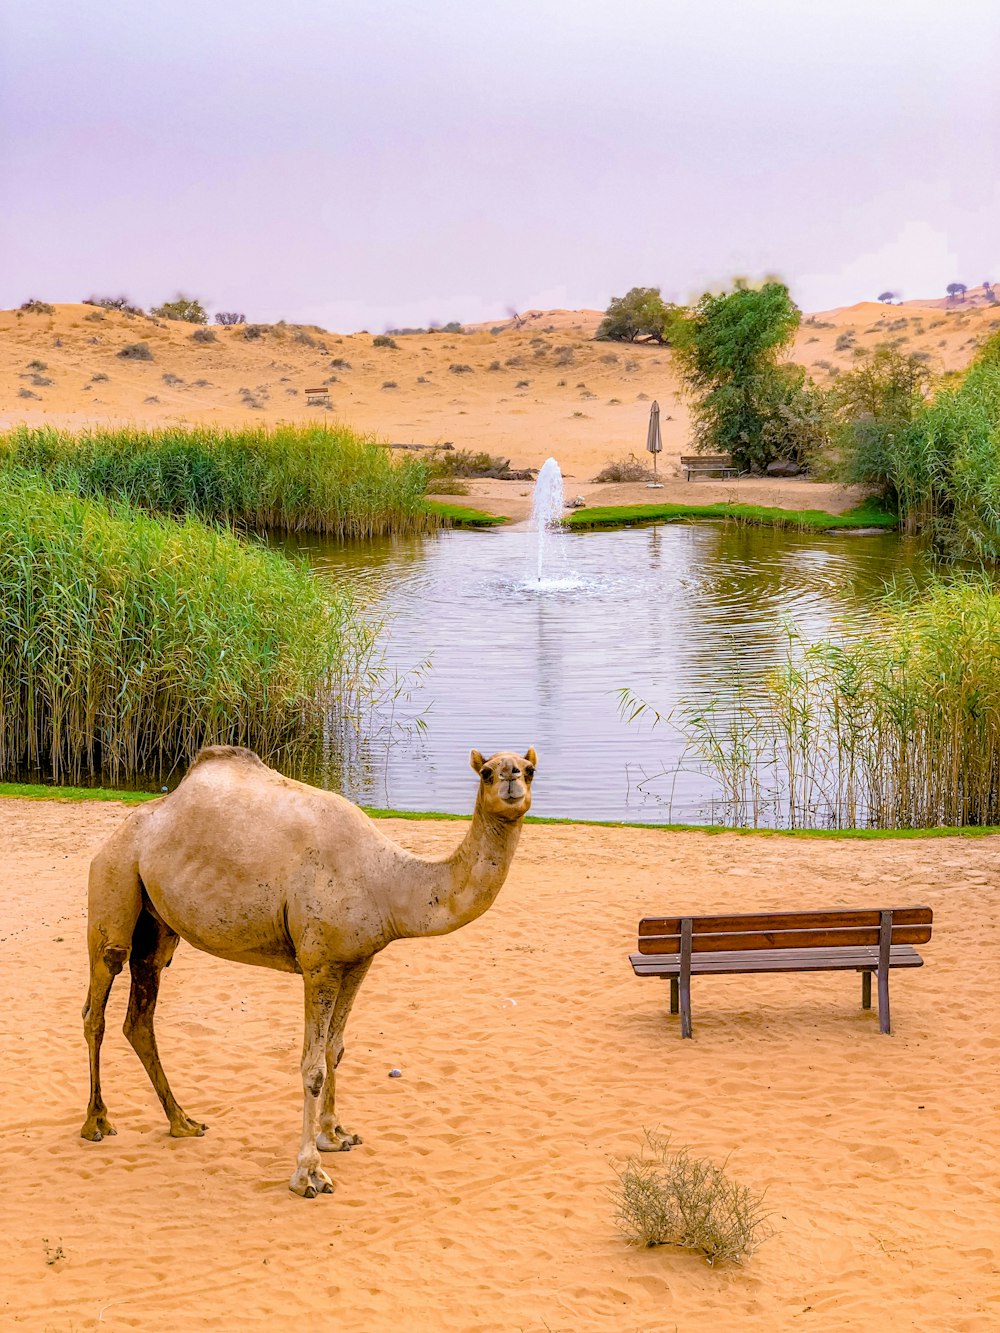 Kamel in der Nähe des Gewässers